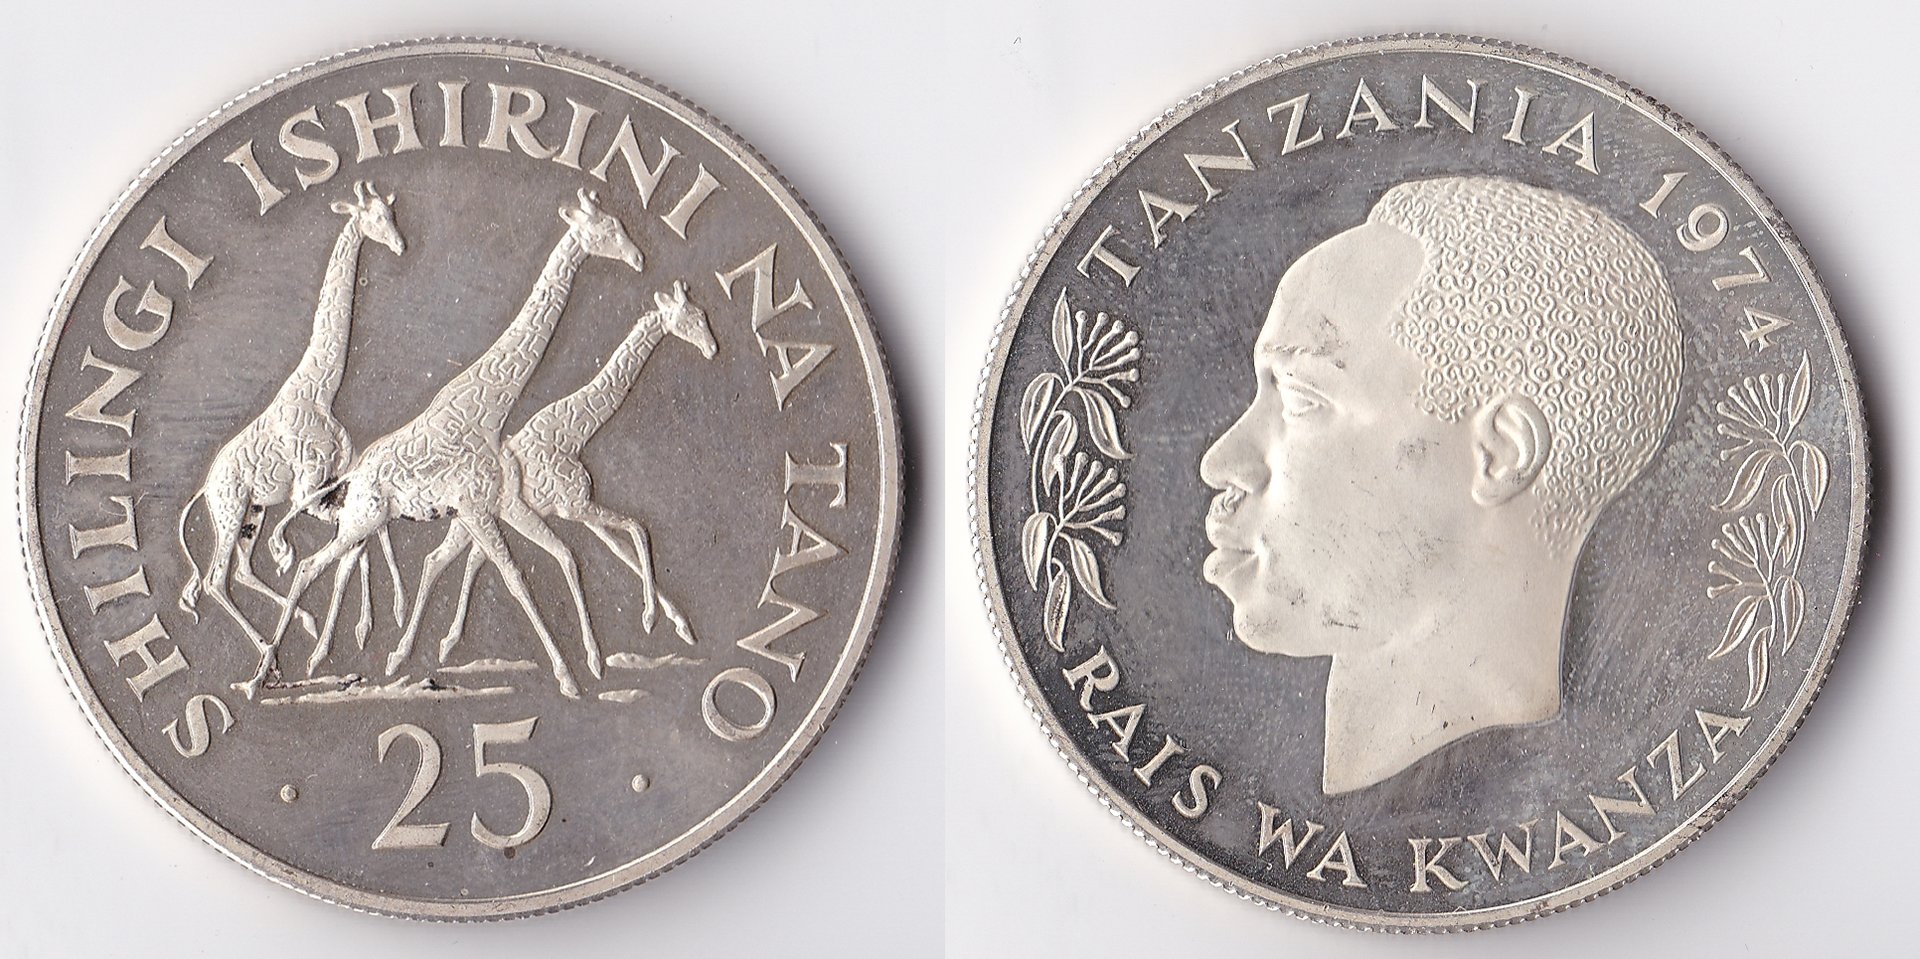 1974 tanzania 25 shillings.jpg